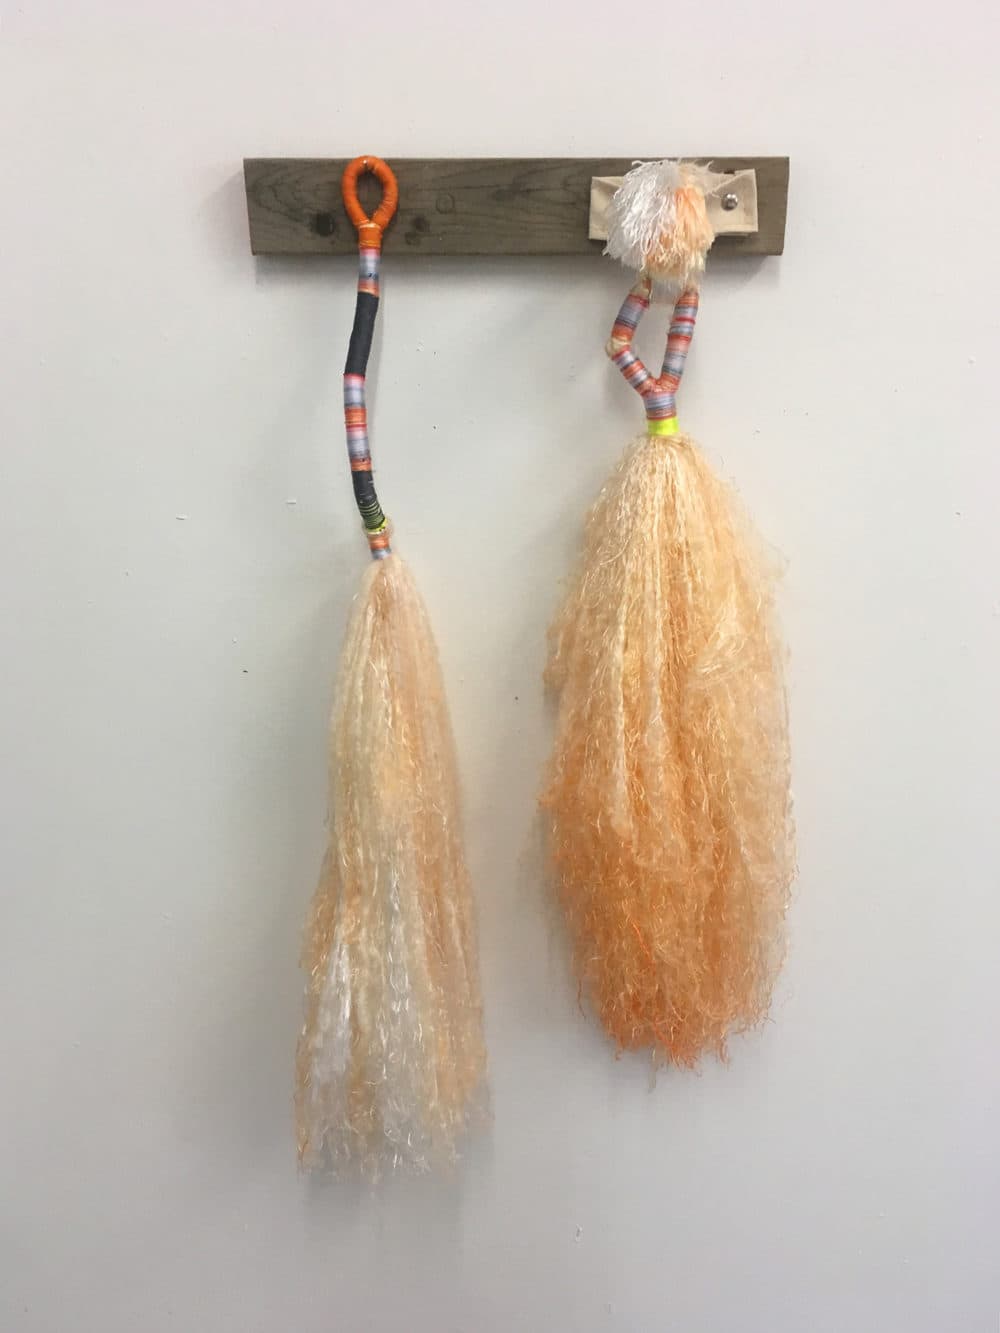 Daniel Zeese's &quot;Two Orange Brooms.&quot; (Courtesy of the artist)